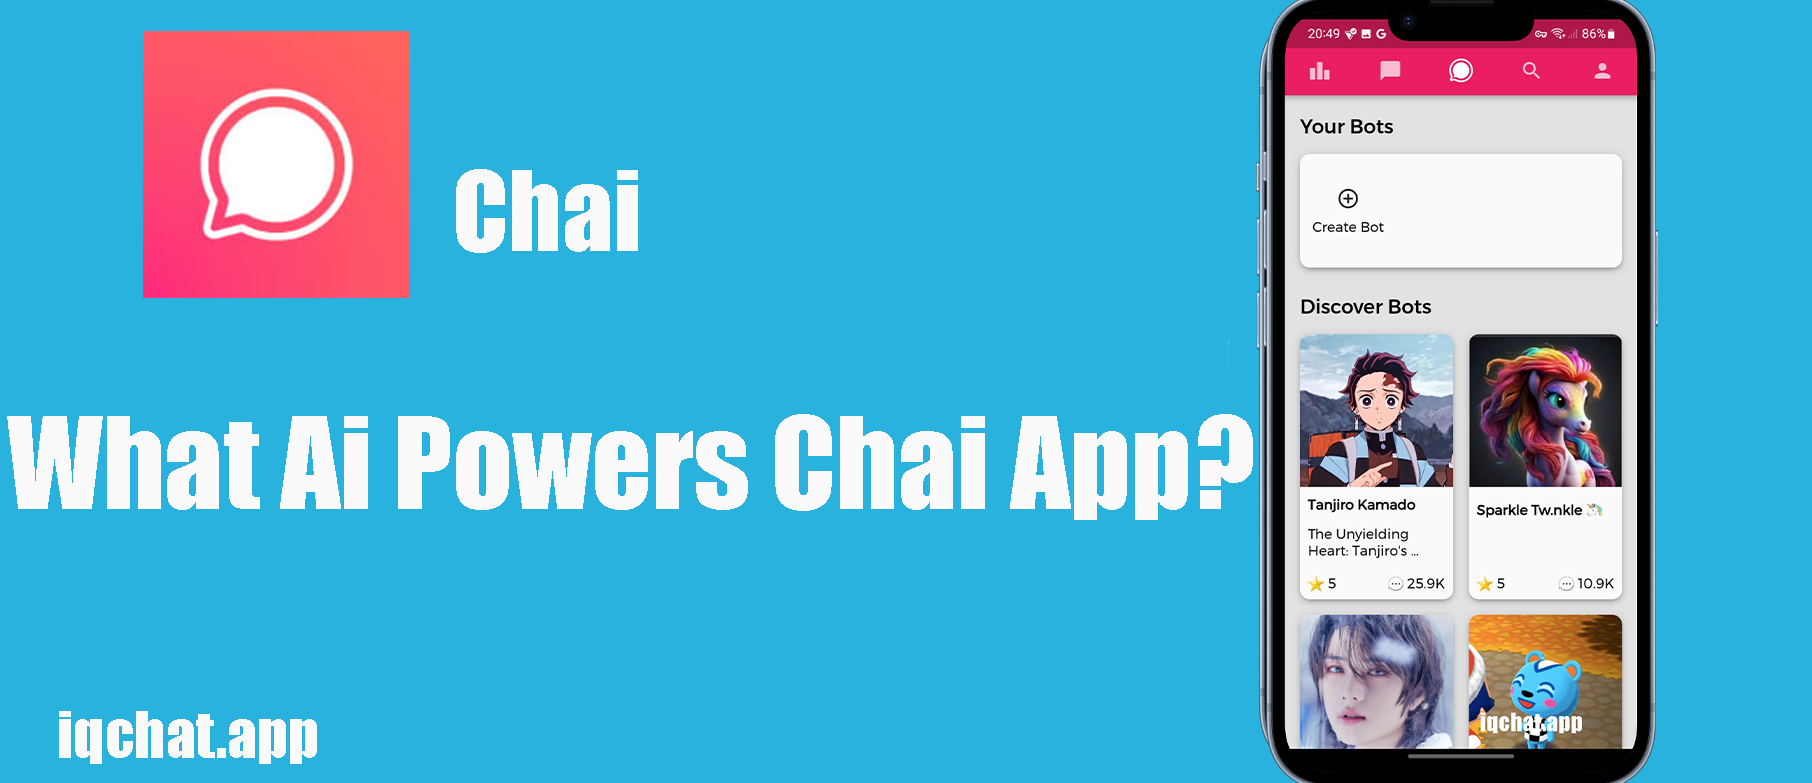    Ai Powers Chai App?